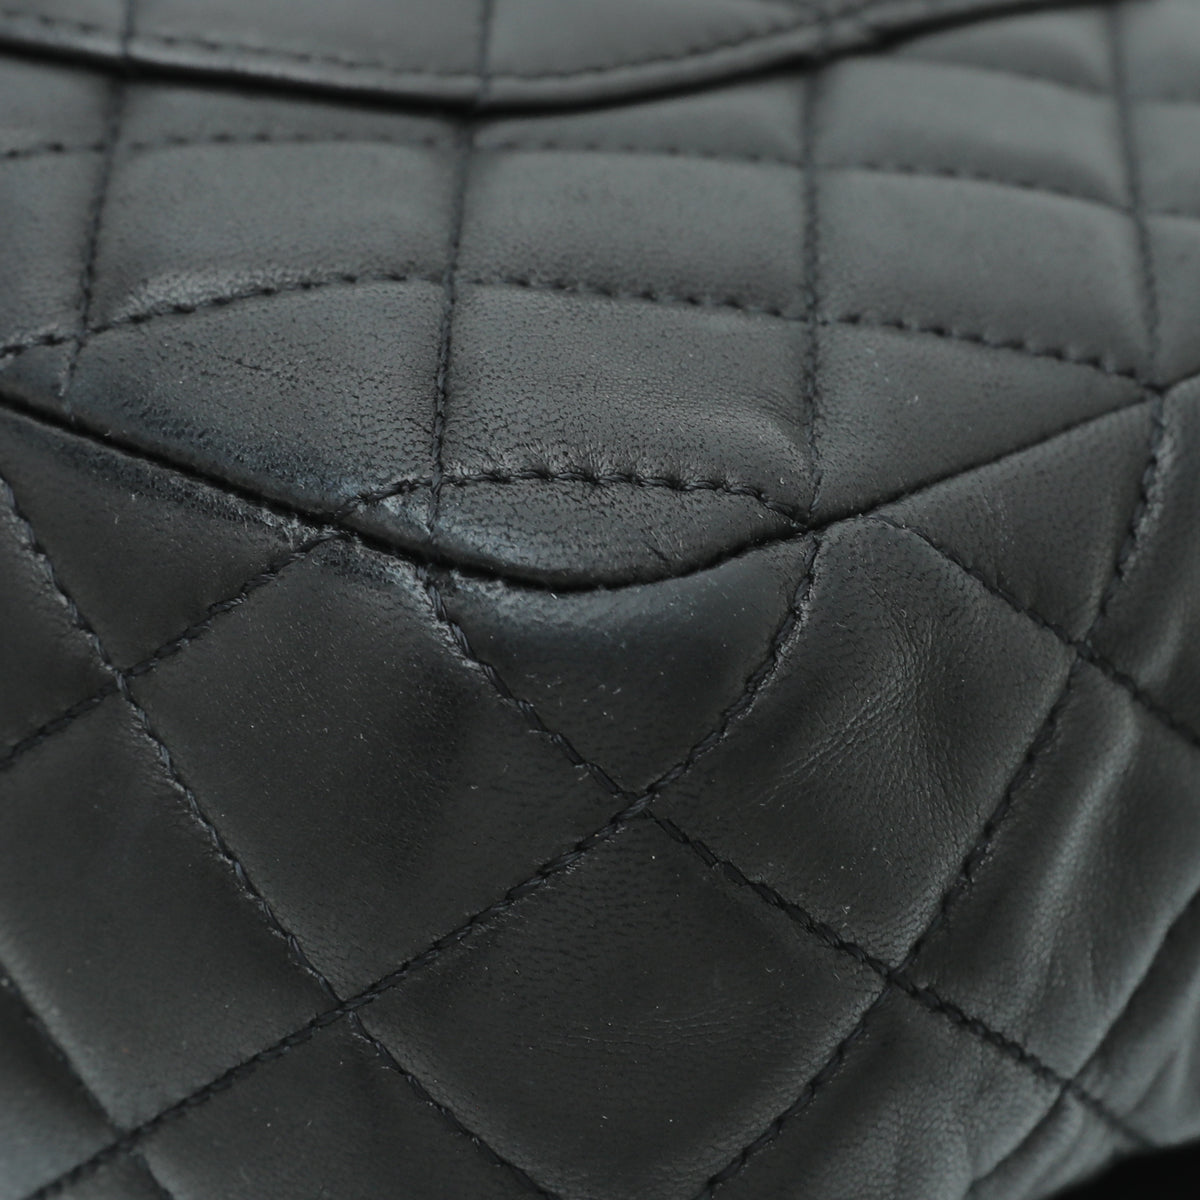 Chanel Black CC Ladybug Flap Medium Bag